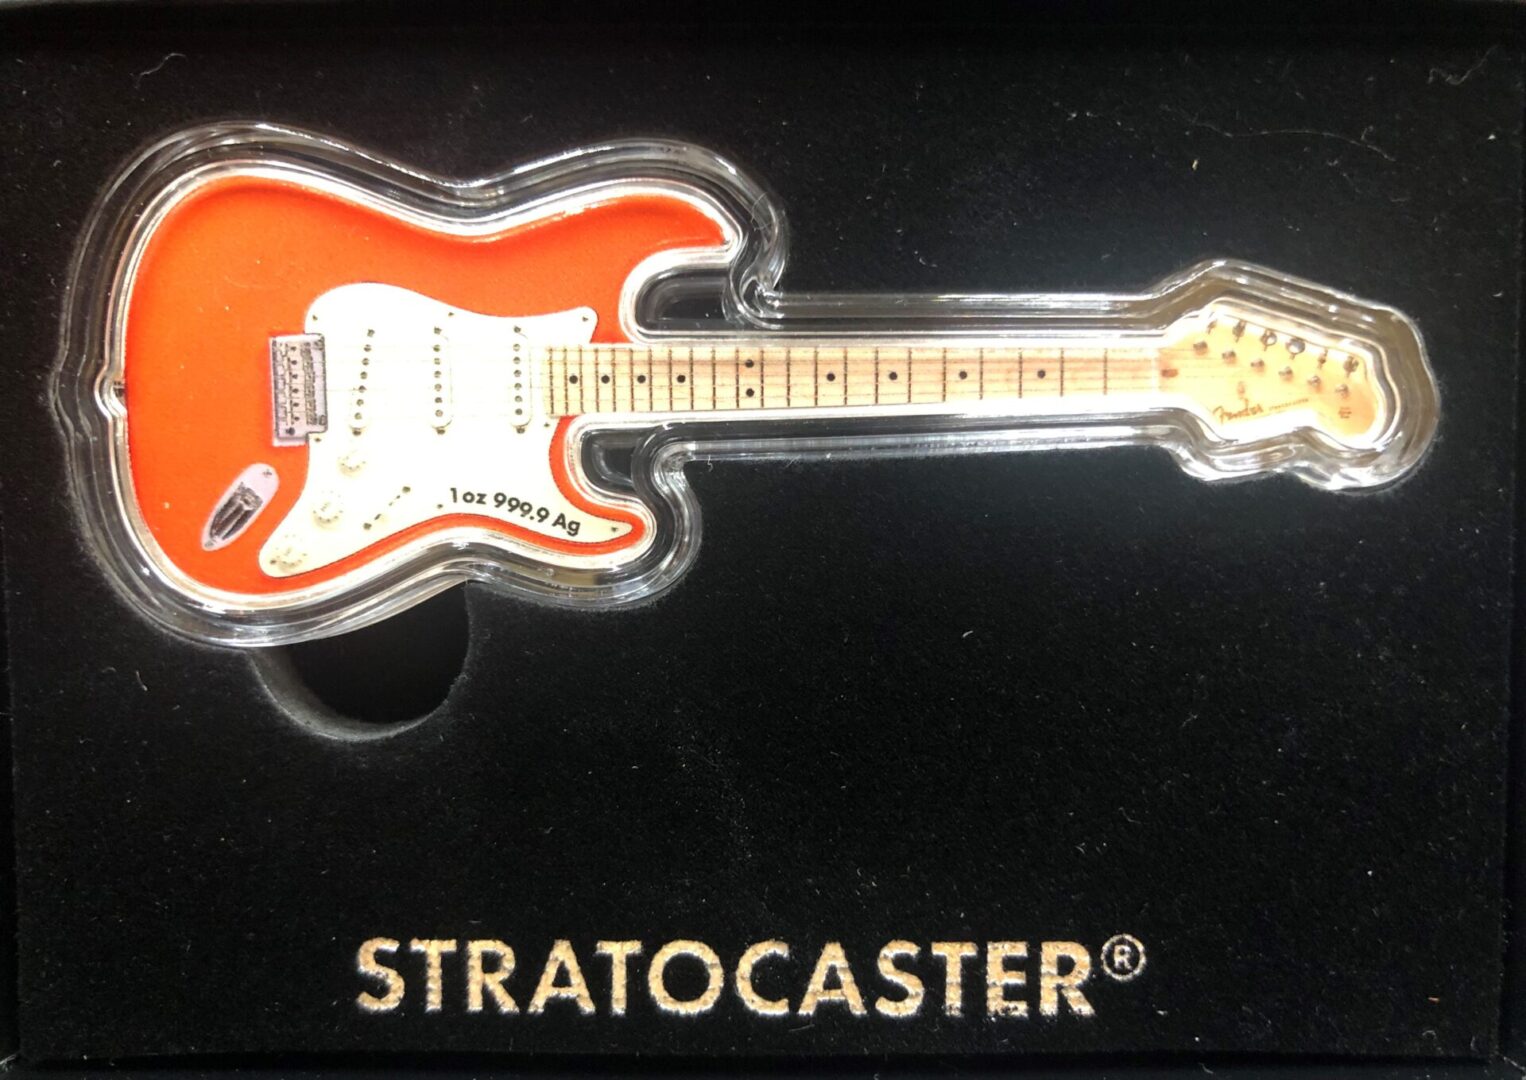 Stratocaster guitar in a black box.